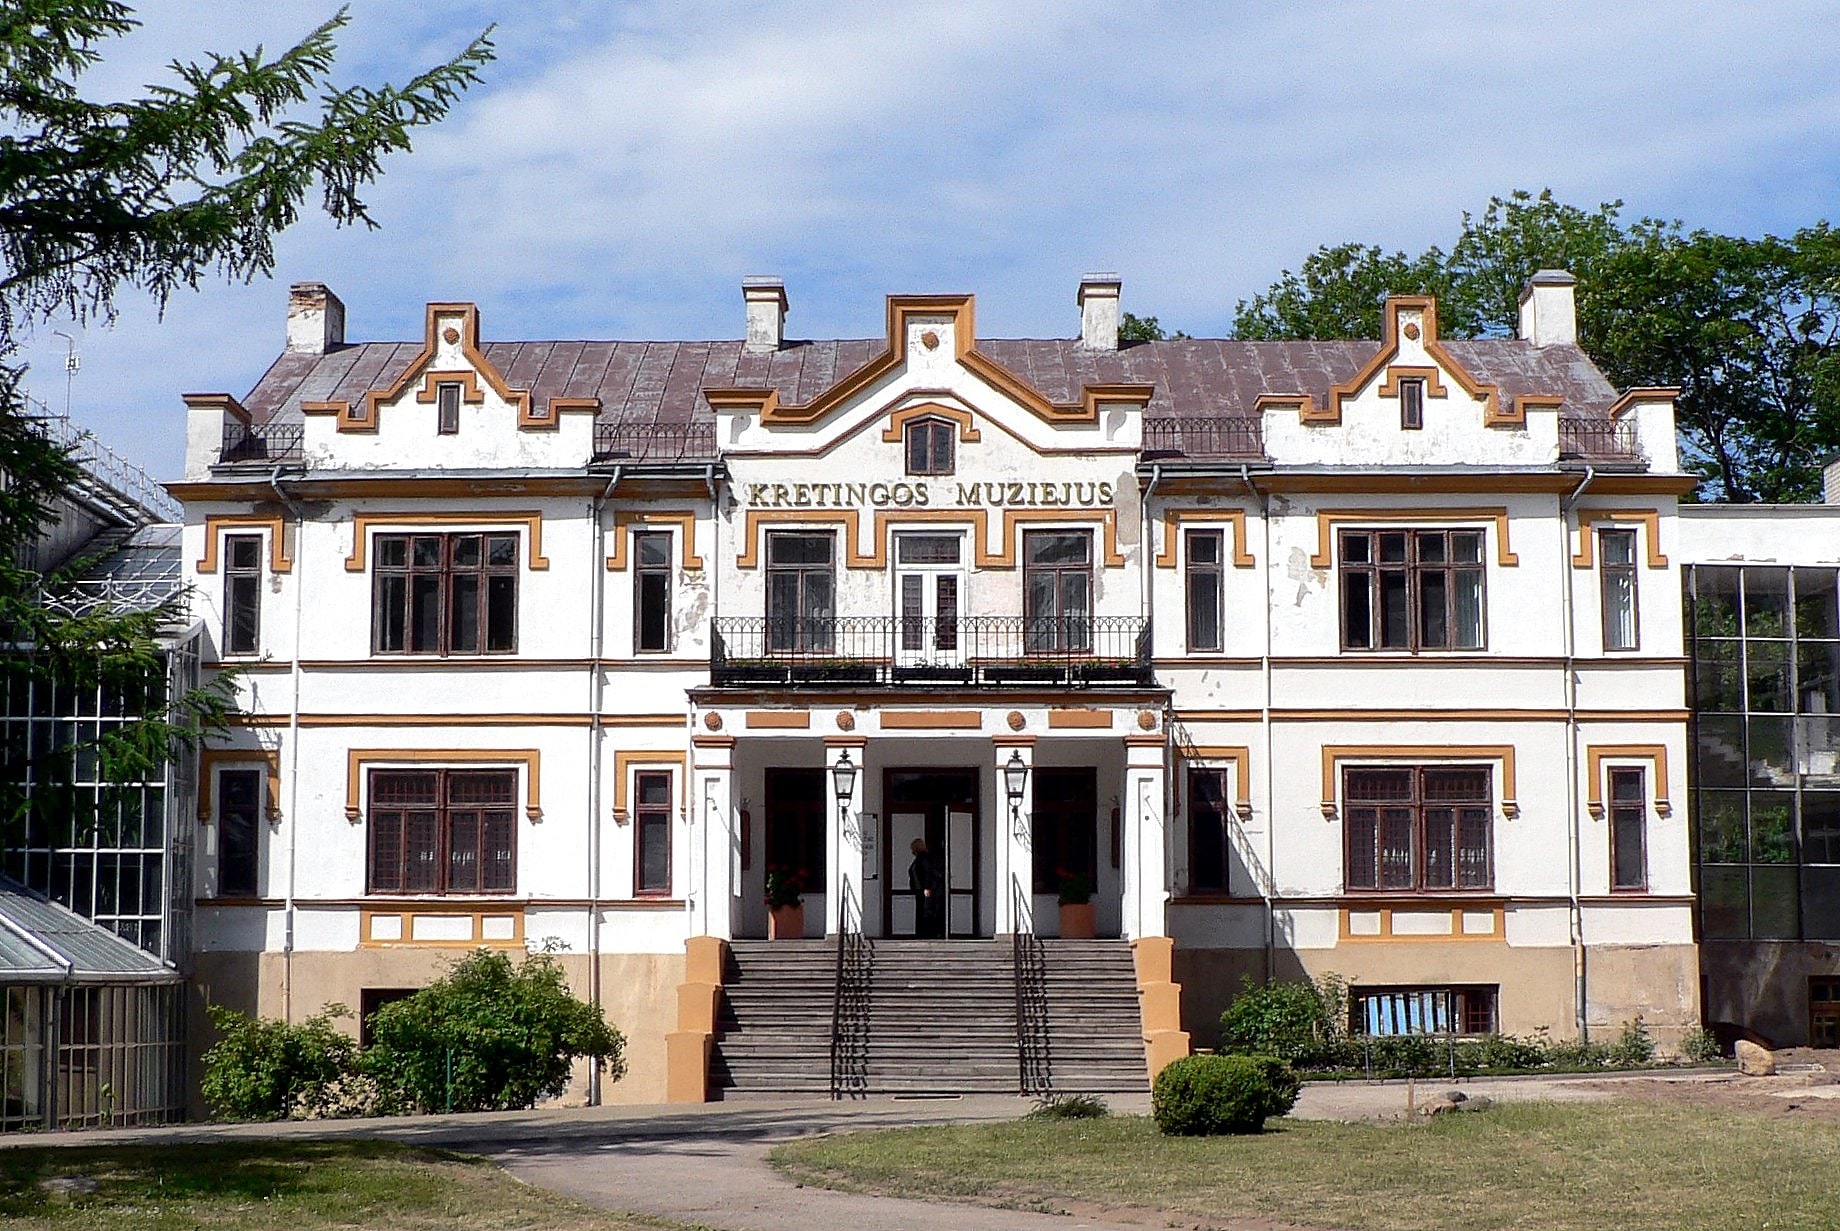 Kretinga, Lithuania